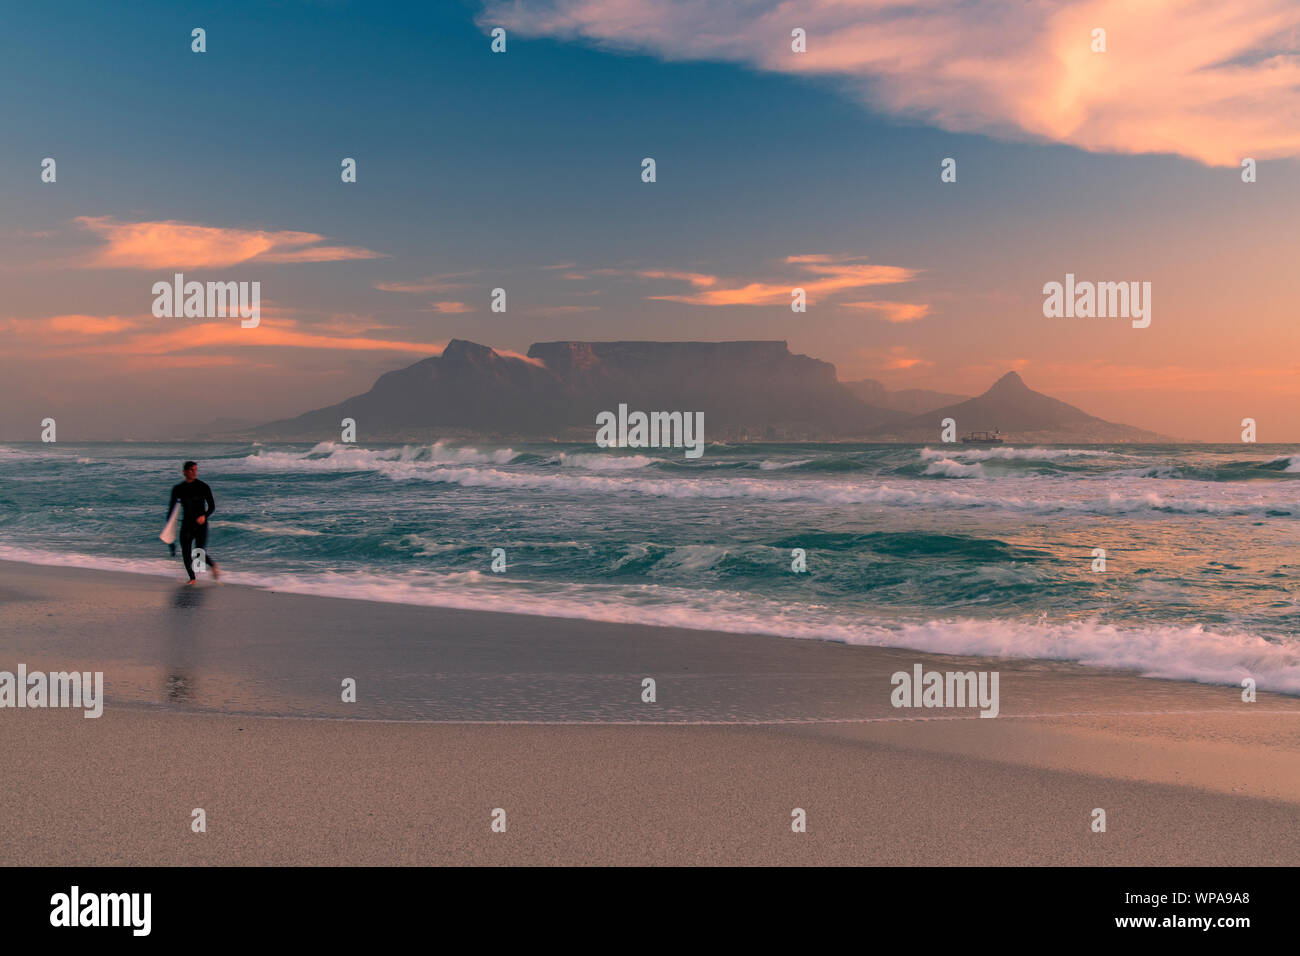 Bloubergstrand spiaggia con Table Mountain in background, Cape Town, Western Cape, Sud Africa Foto Stock